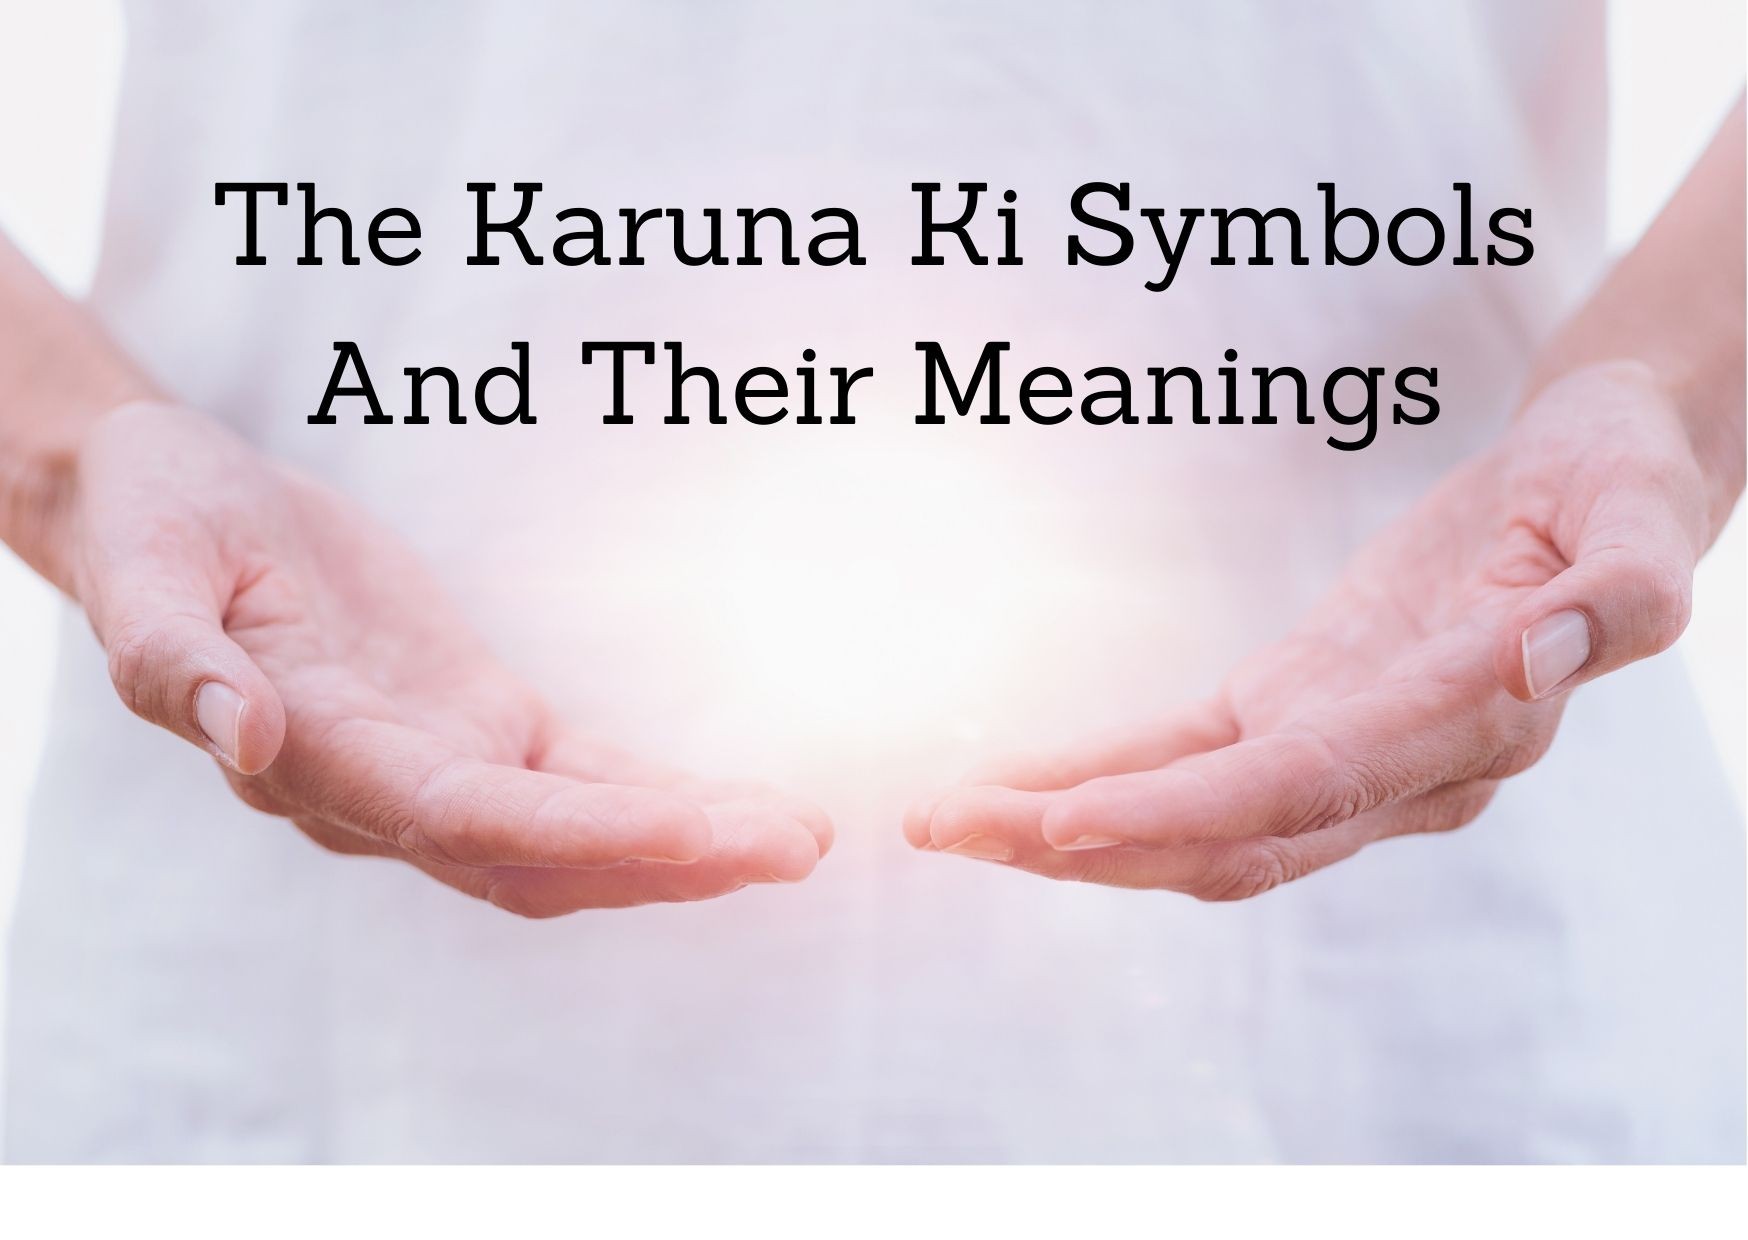 The Karuna Ki Symbols And Their Meanings